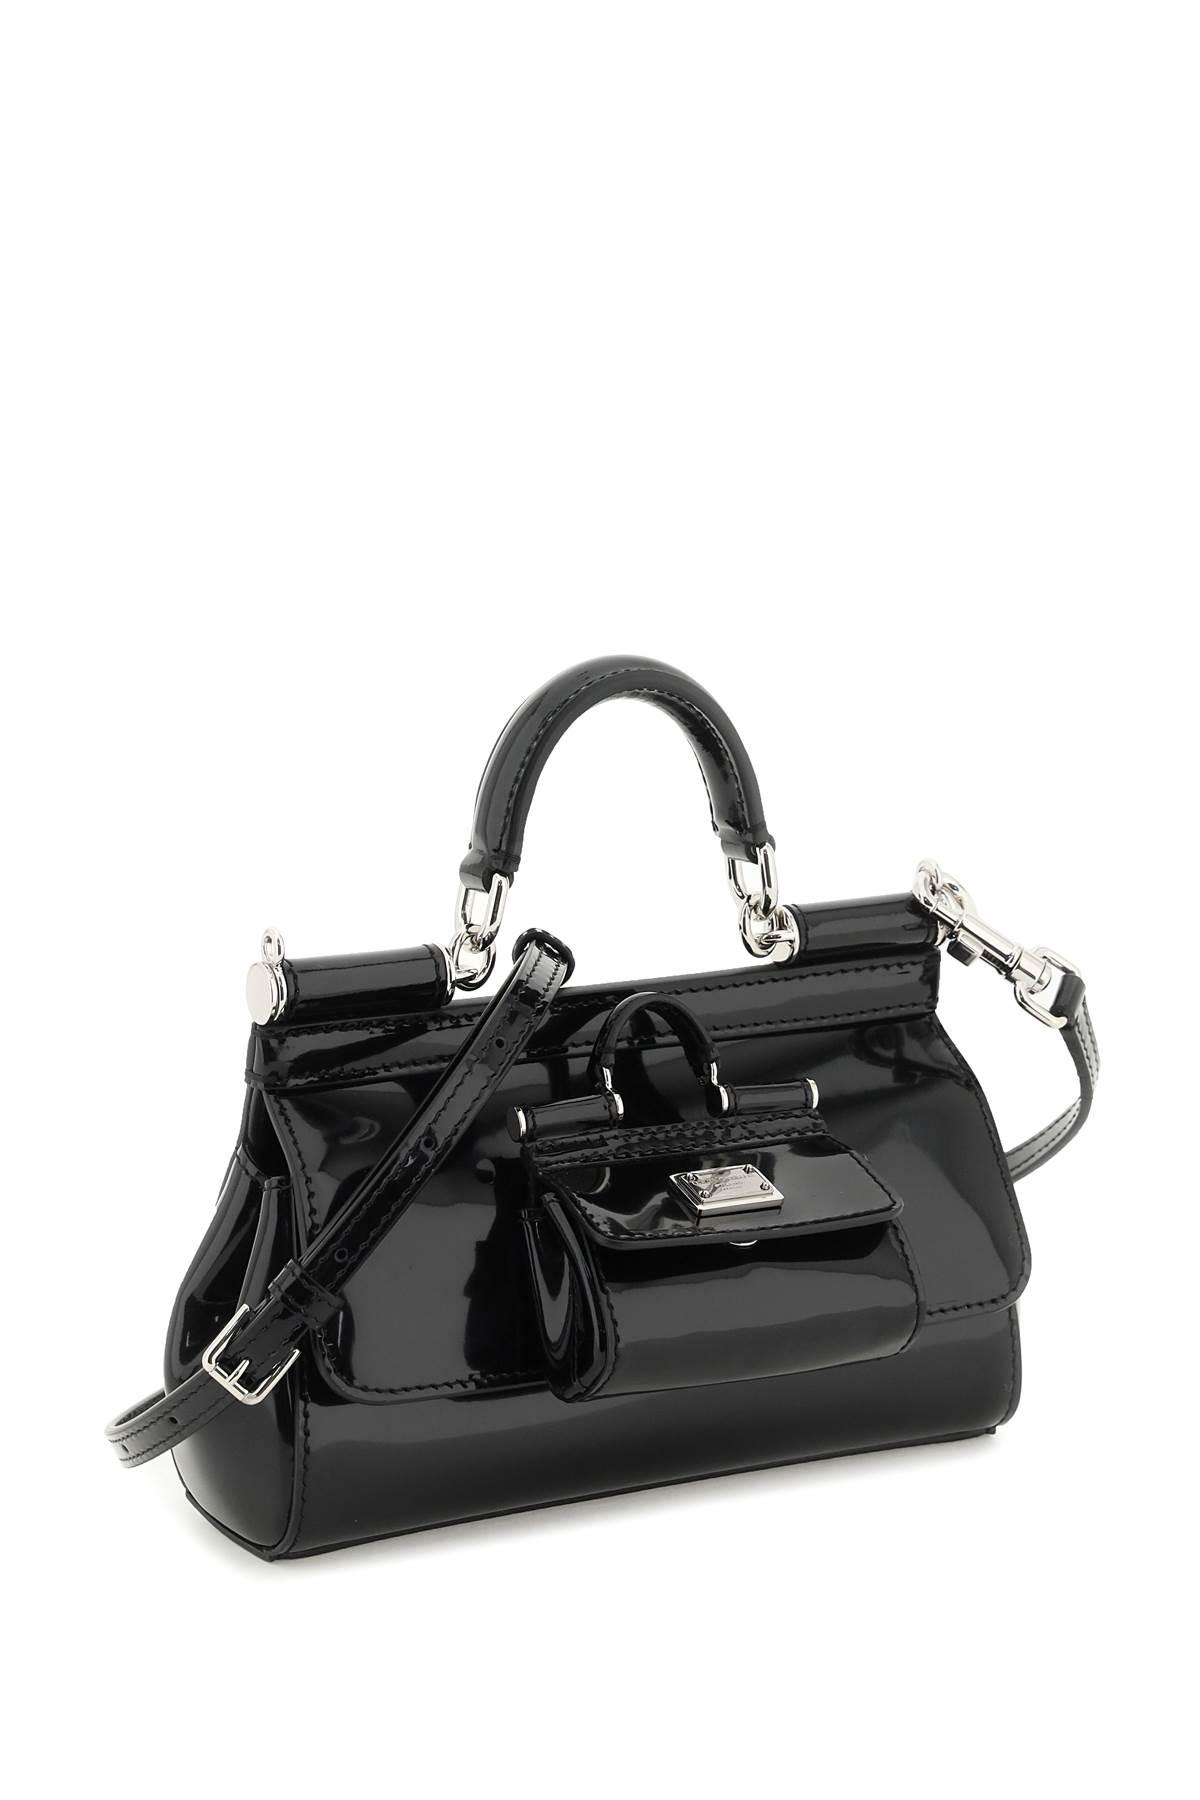 Dolce & Gabbana Black Sicily Small Leather Bag